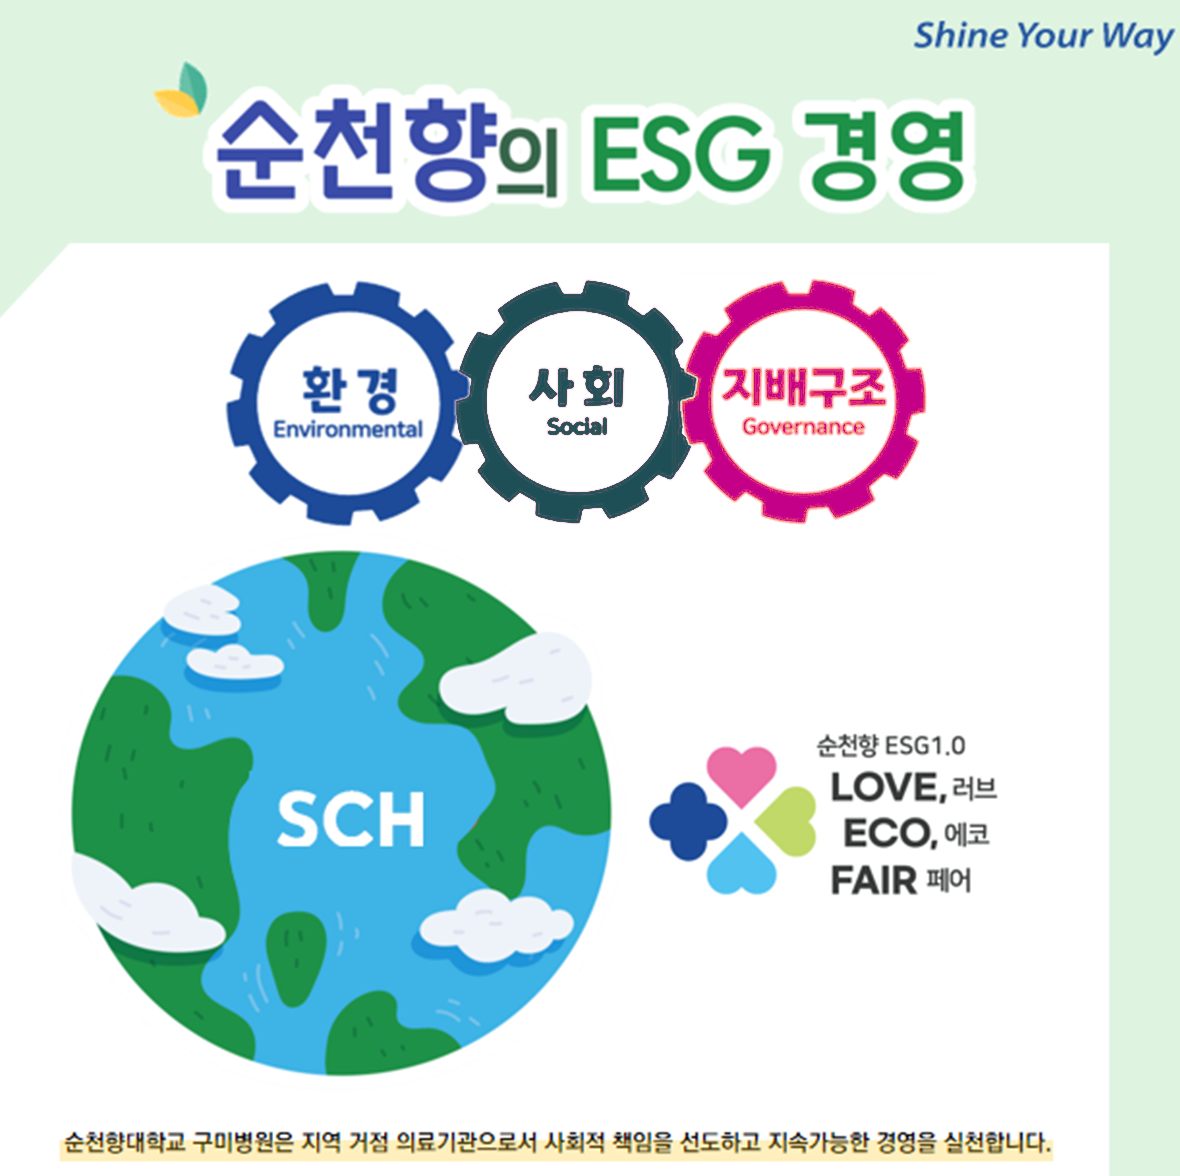 Shine Your Way 순천향의 ESG 경영 환경 Environmental 사회 Social 지배구조 Governance
SCH 순천향 ESG1.0 LOVE, 러브 ECO, 에코 FAIR 페어
순천향대학교 구미병원은 지역 거점 의료기관으로서 사회적 책임을 선도하고 지속가능한 경영을 실천합니다.